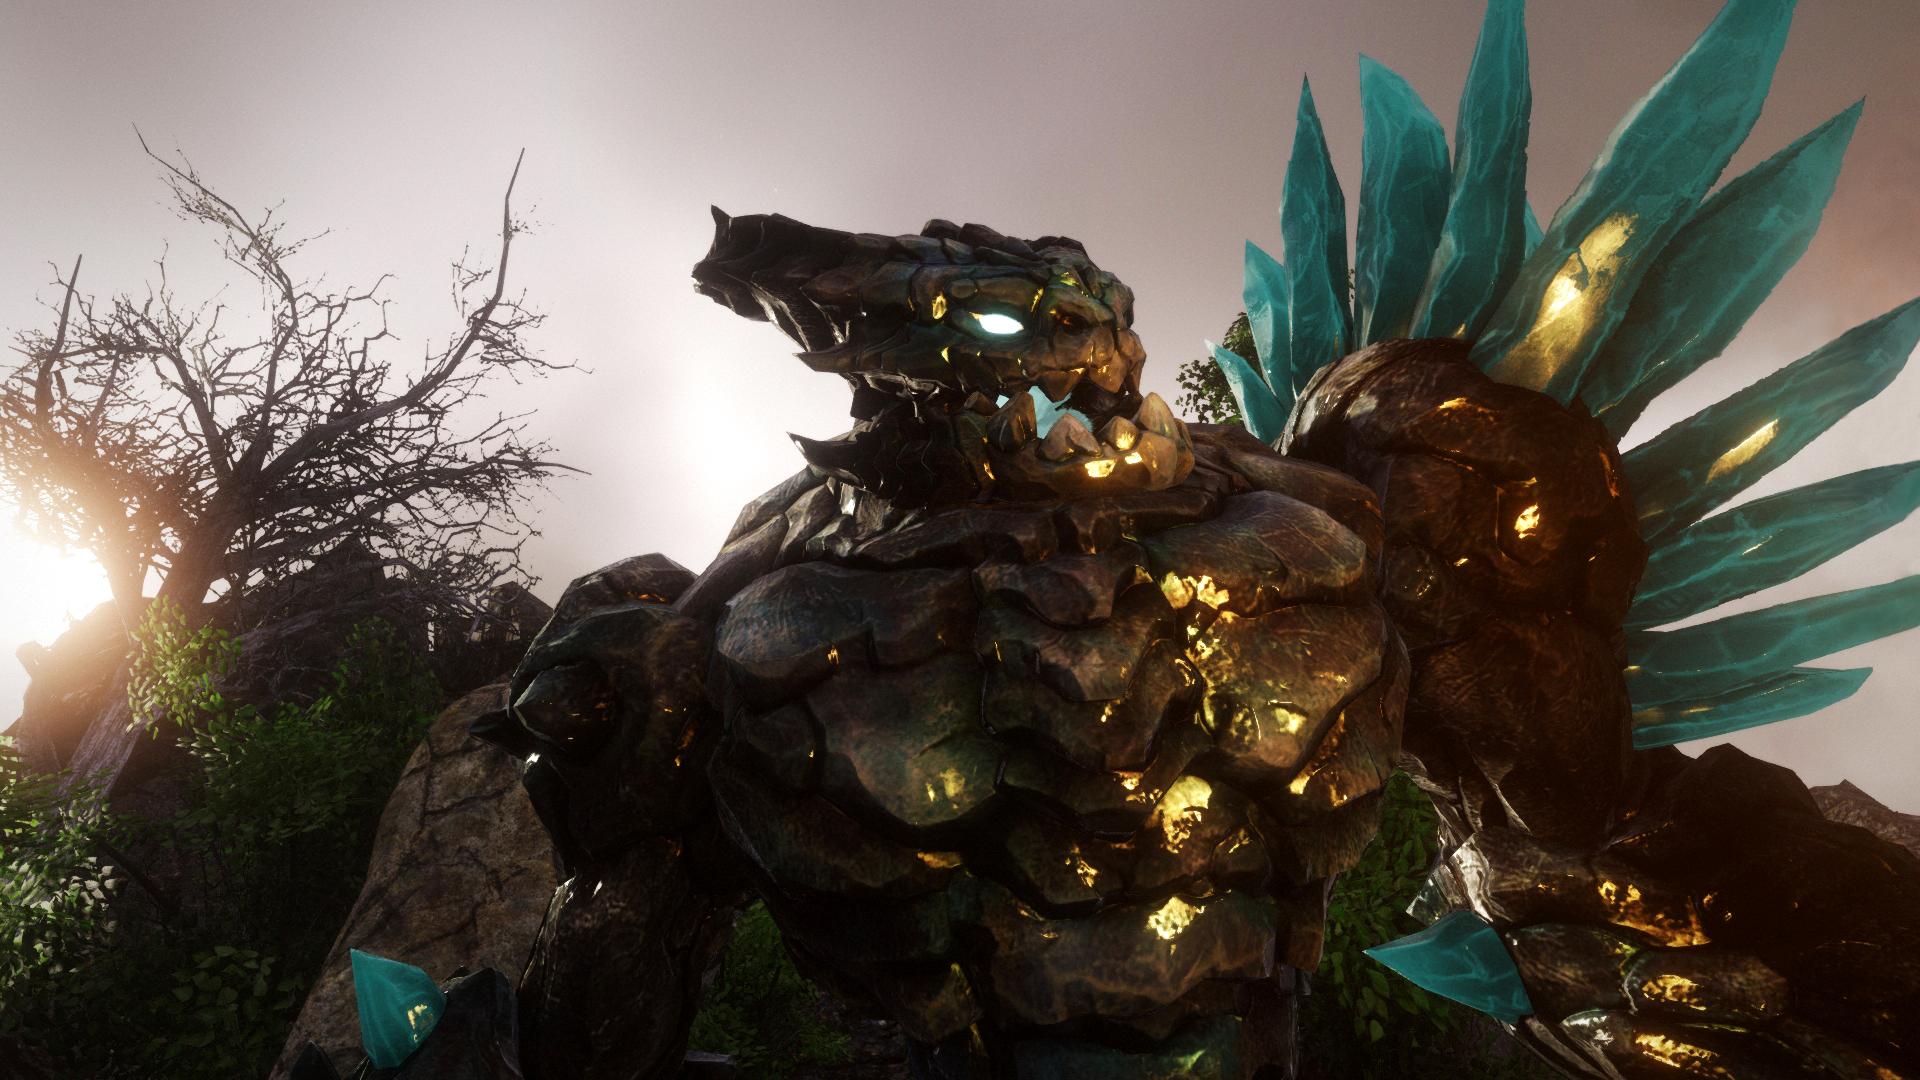 Screenshot №14 from game Risen 3 - Titan Lords